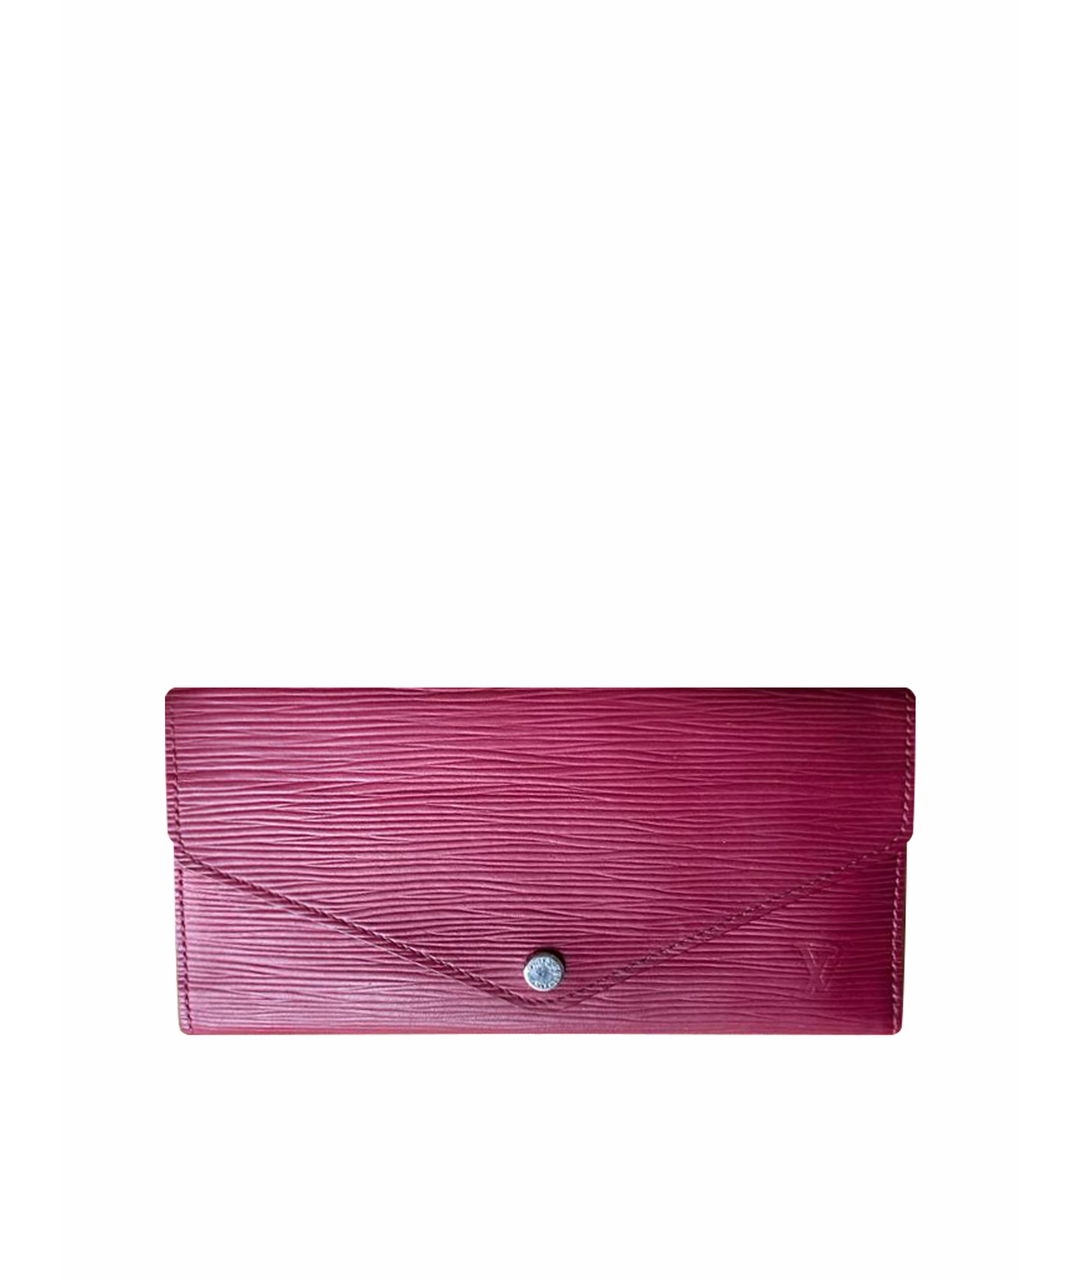 LOUIS VUITTON PRE-OWNED Розовый кожаный кошелек, фото 1